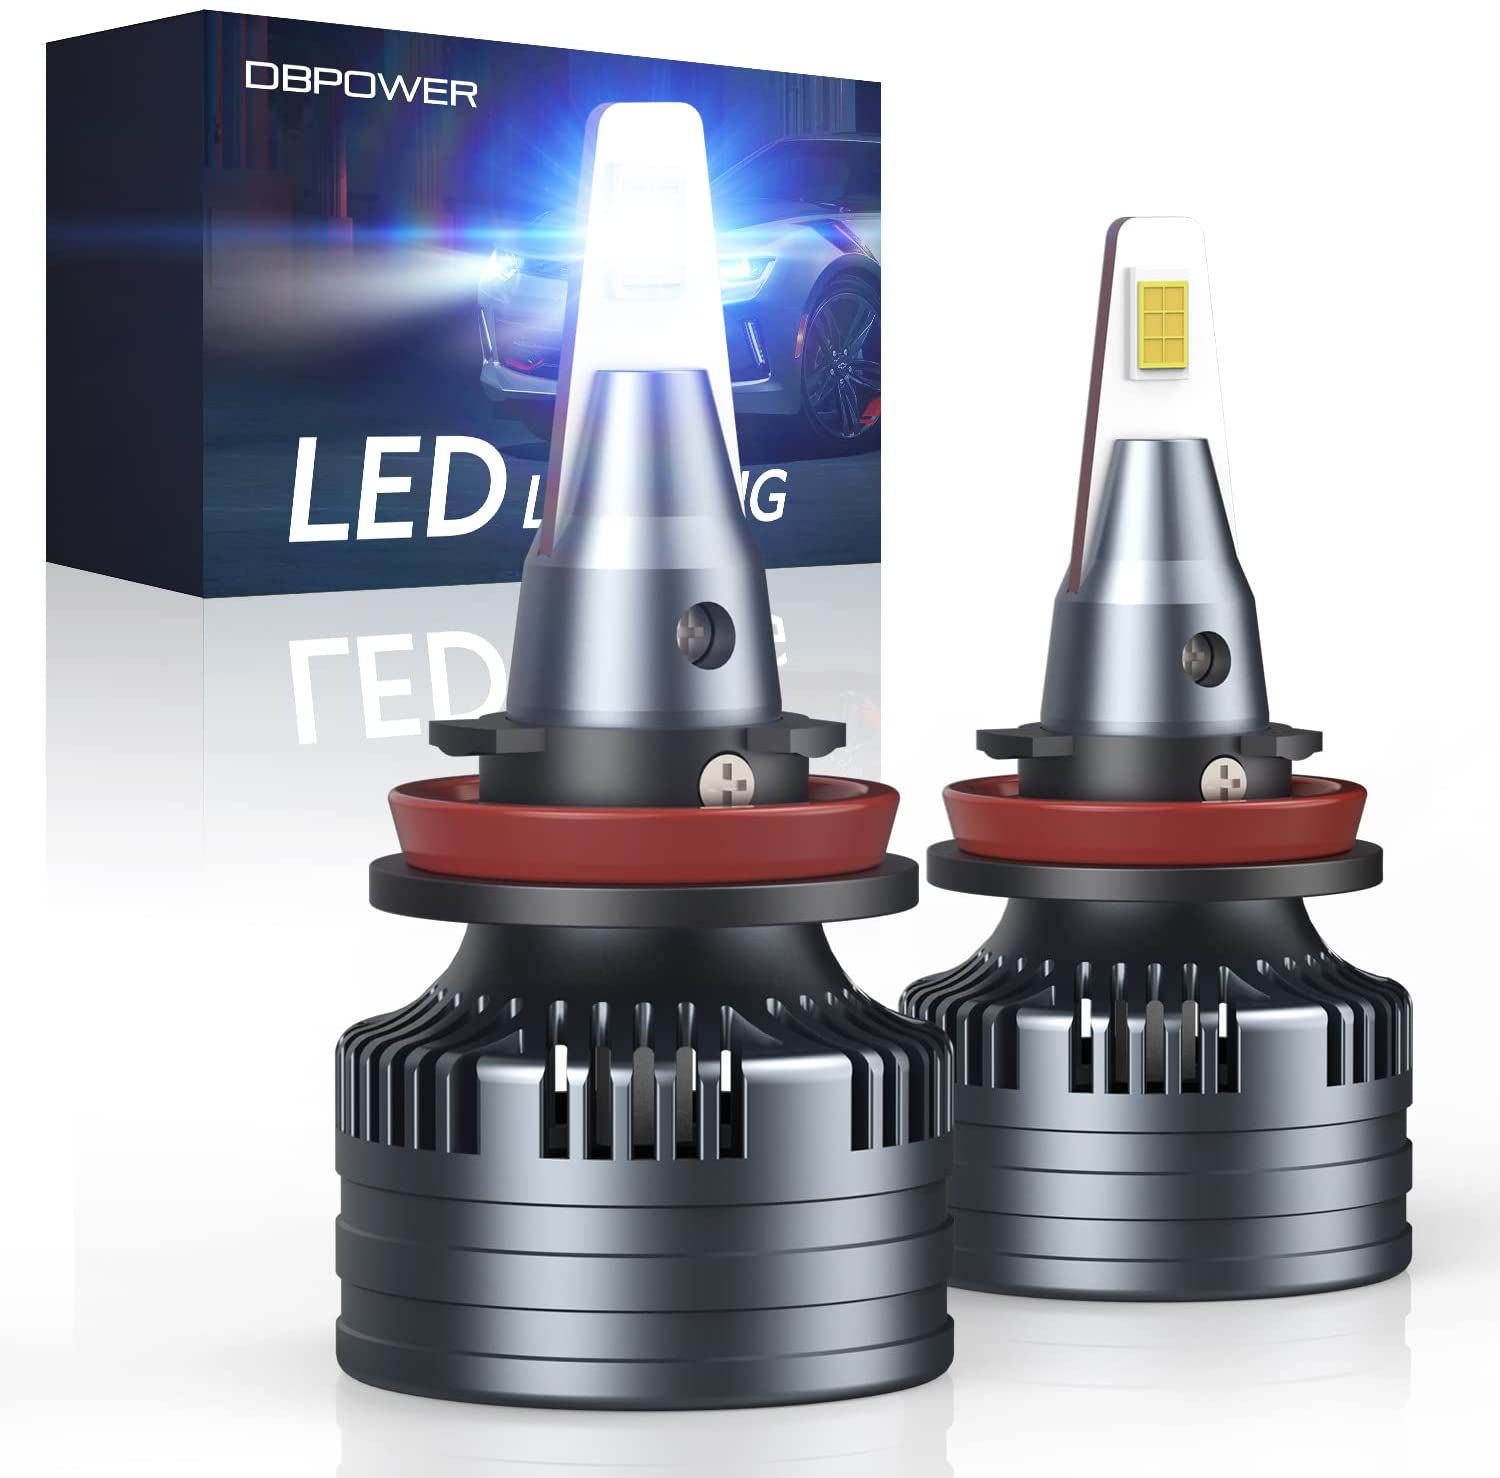 DBPOWER’s H8 LED Headlight Bulb